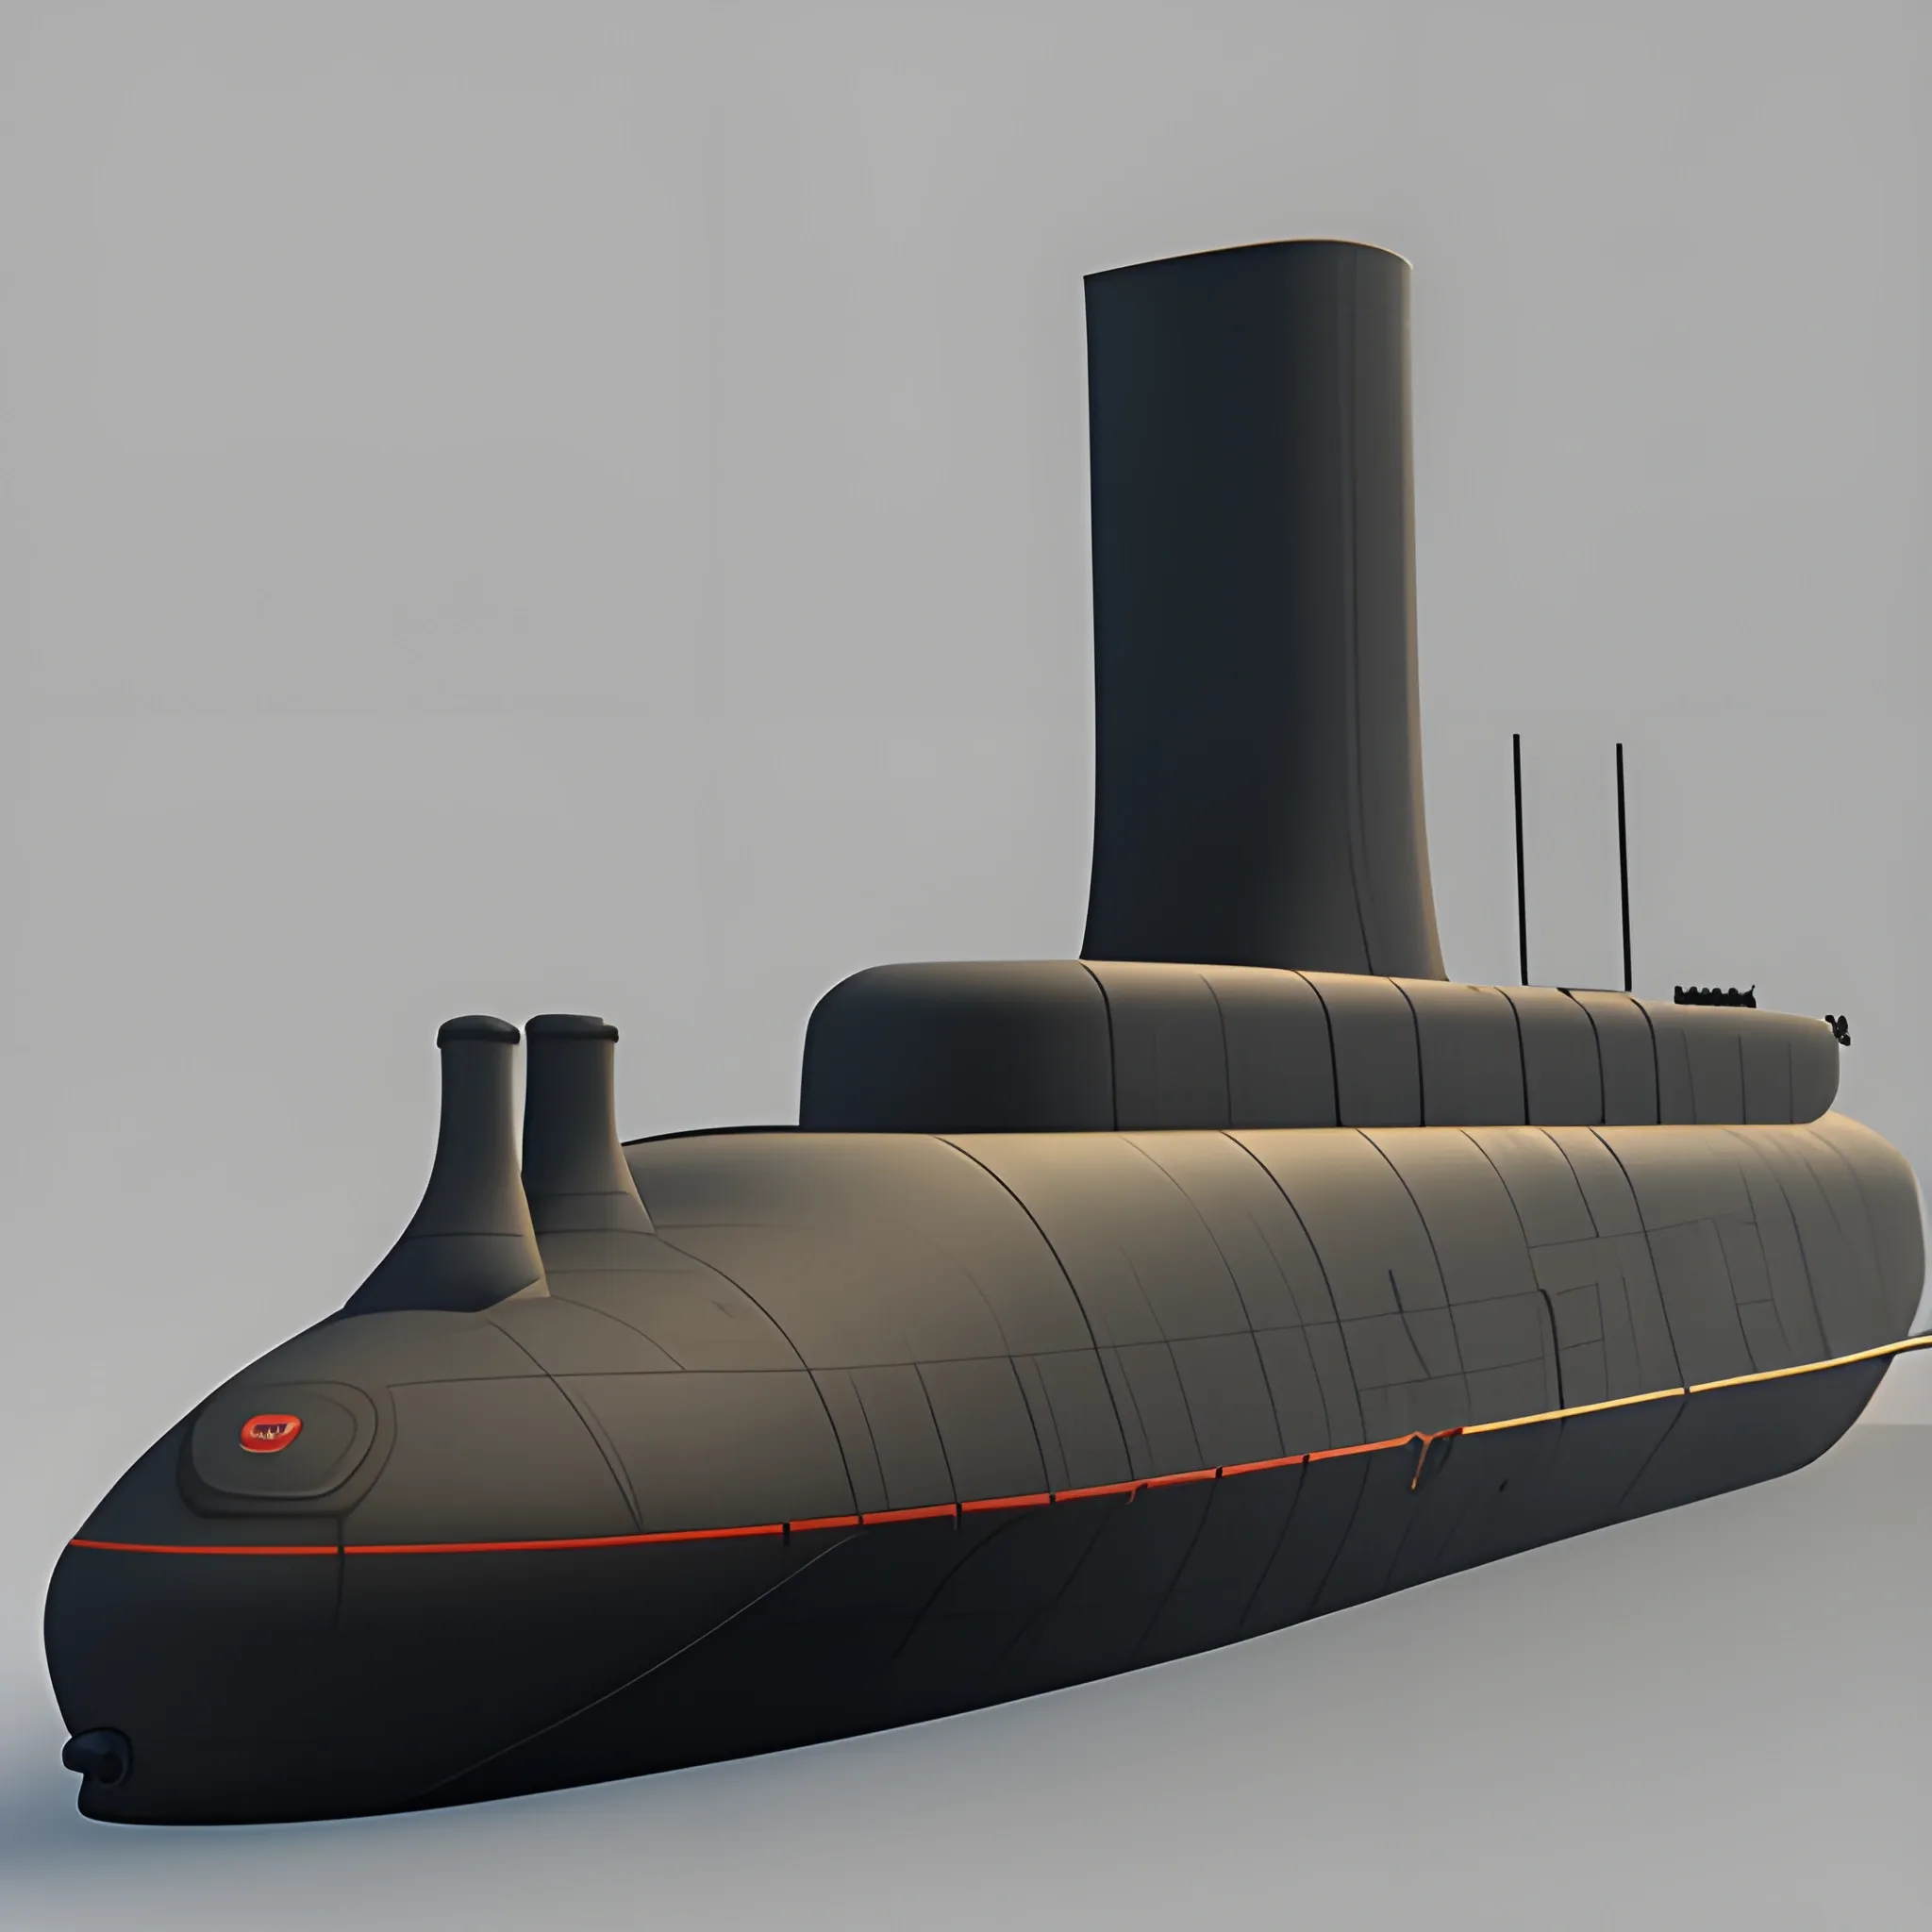 A nuclear submarine is a submarine powered by a nuclear reactor ， 3D

